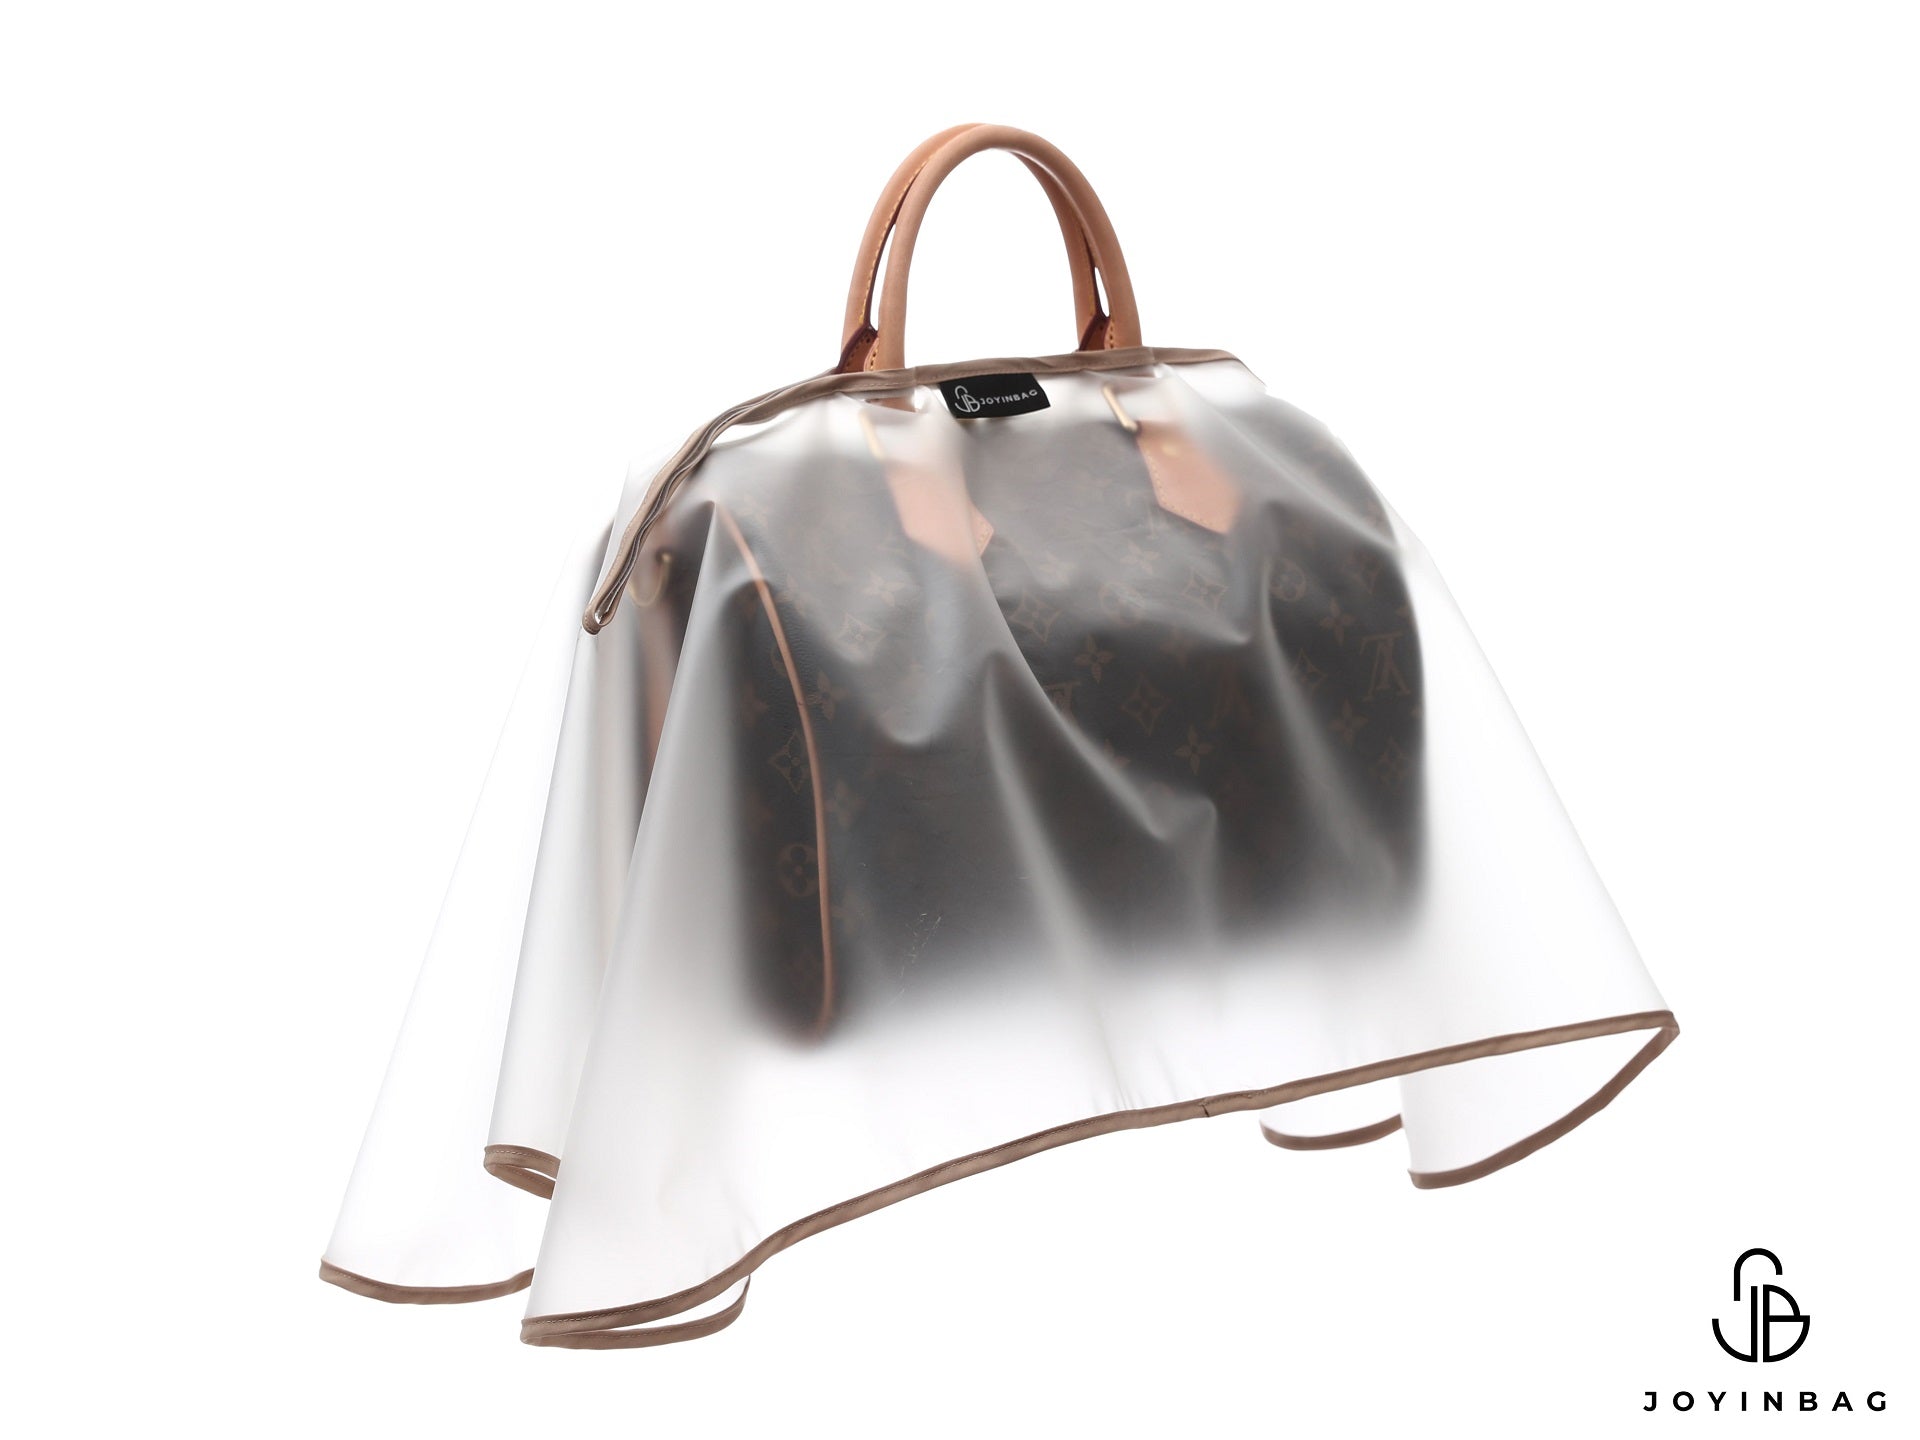 Designer Handbag Rain Protector Bag Raincoat Handbag Rain Slicker